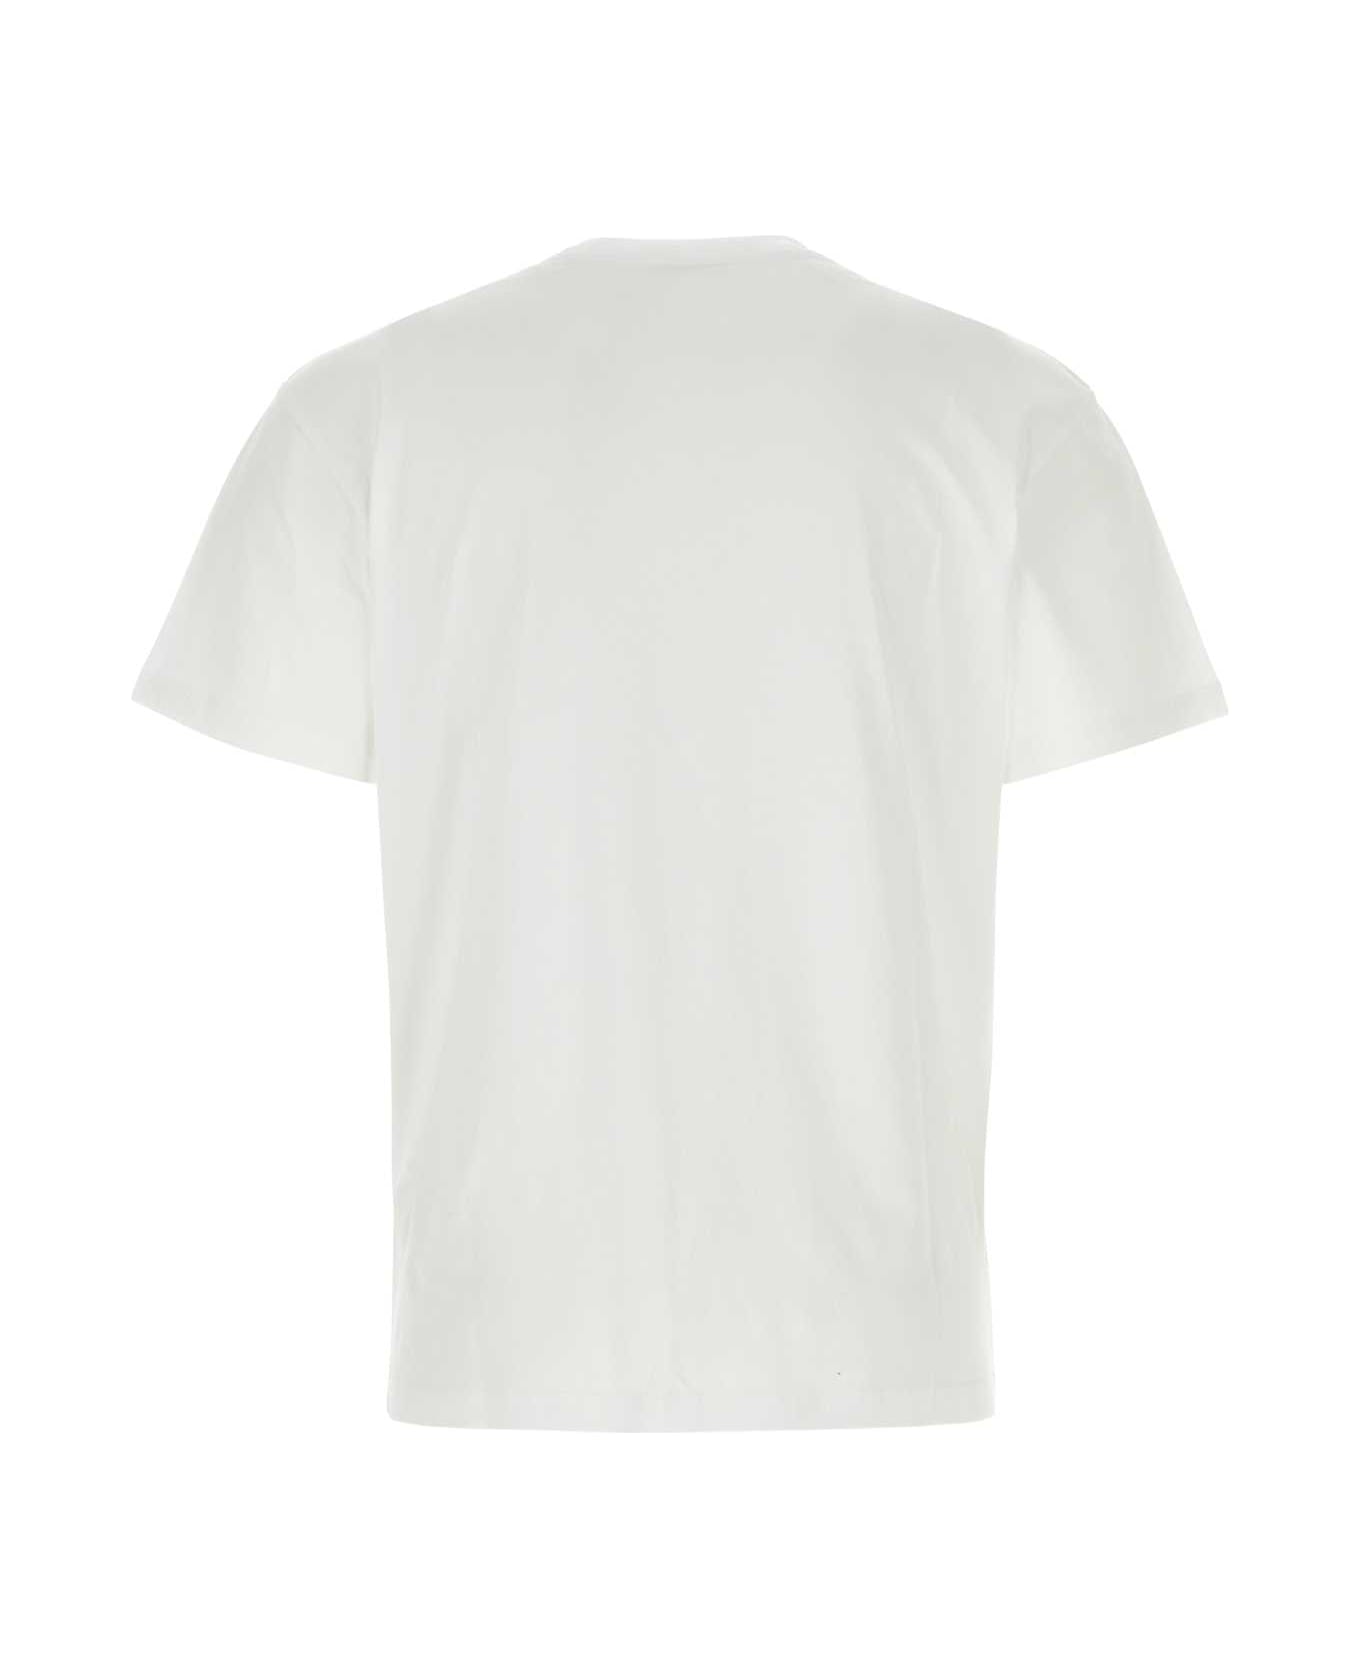 J.W. Anderson White Cotton T-shirt - White シャツ